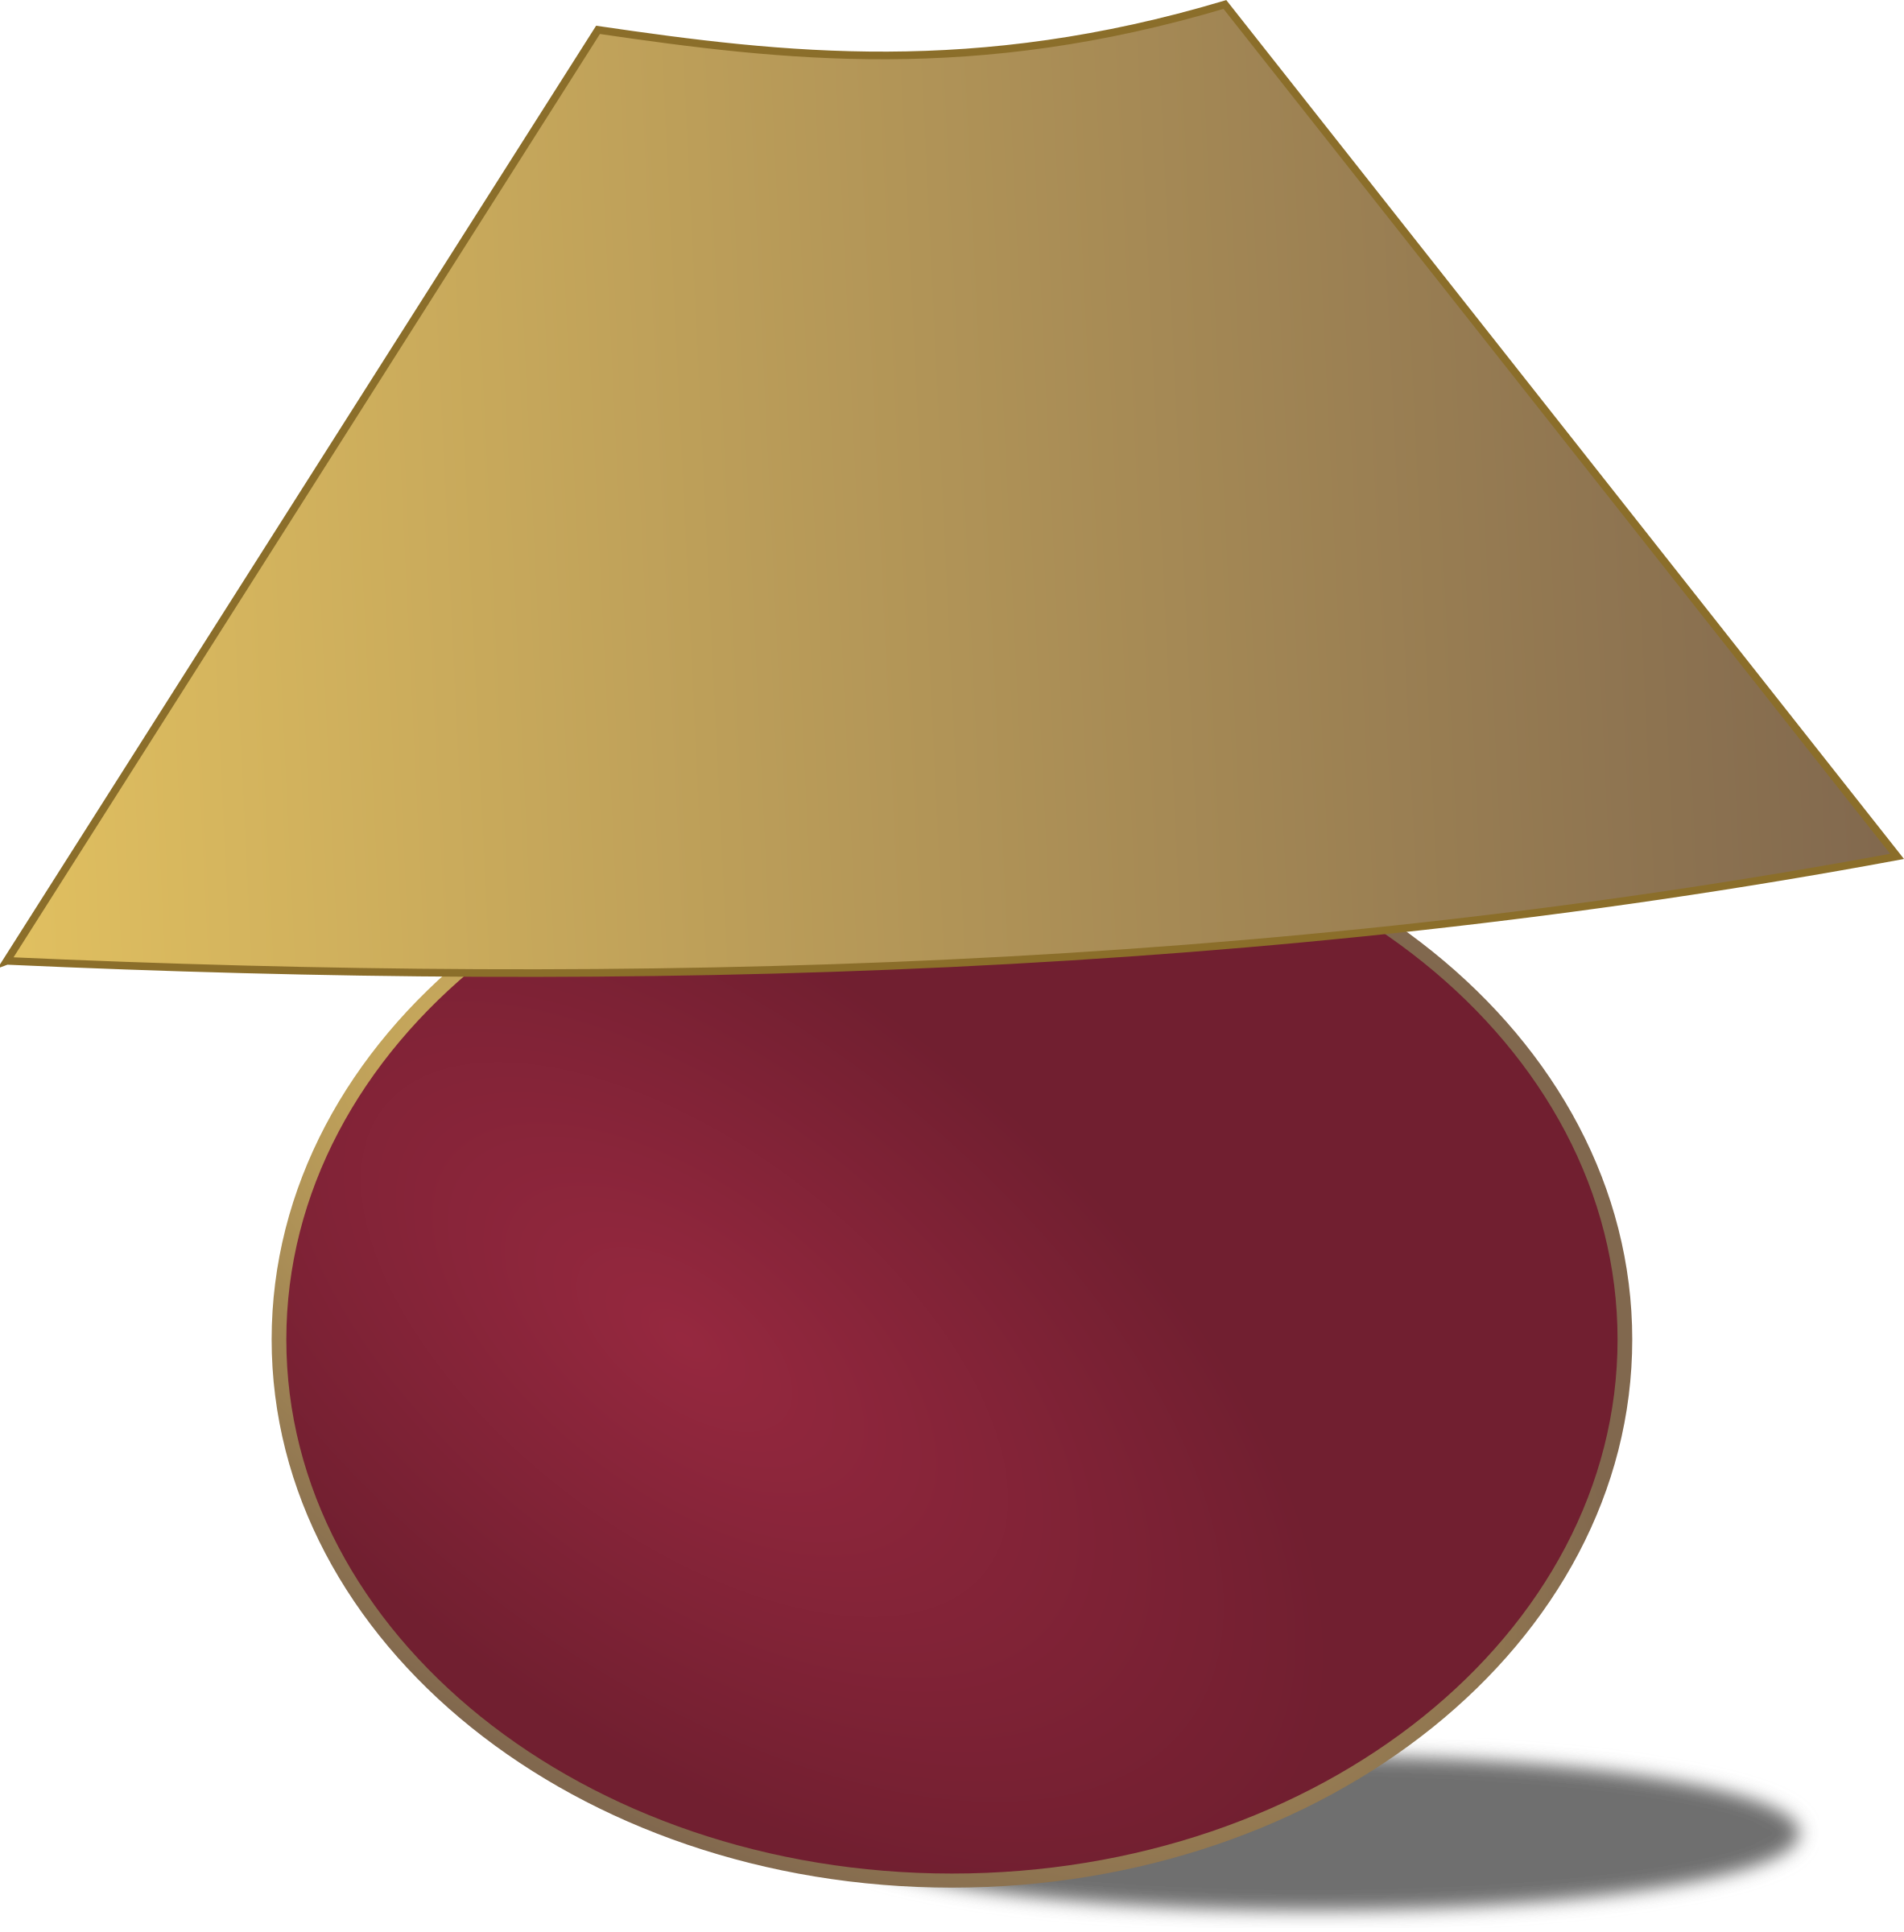 Olympic lamp